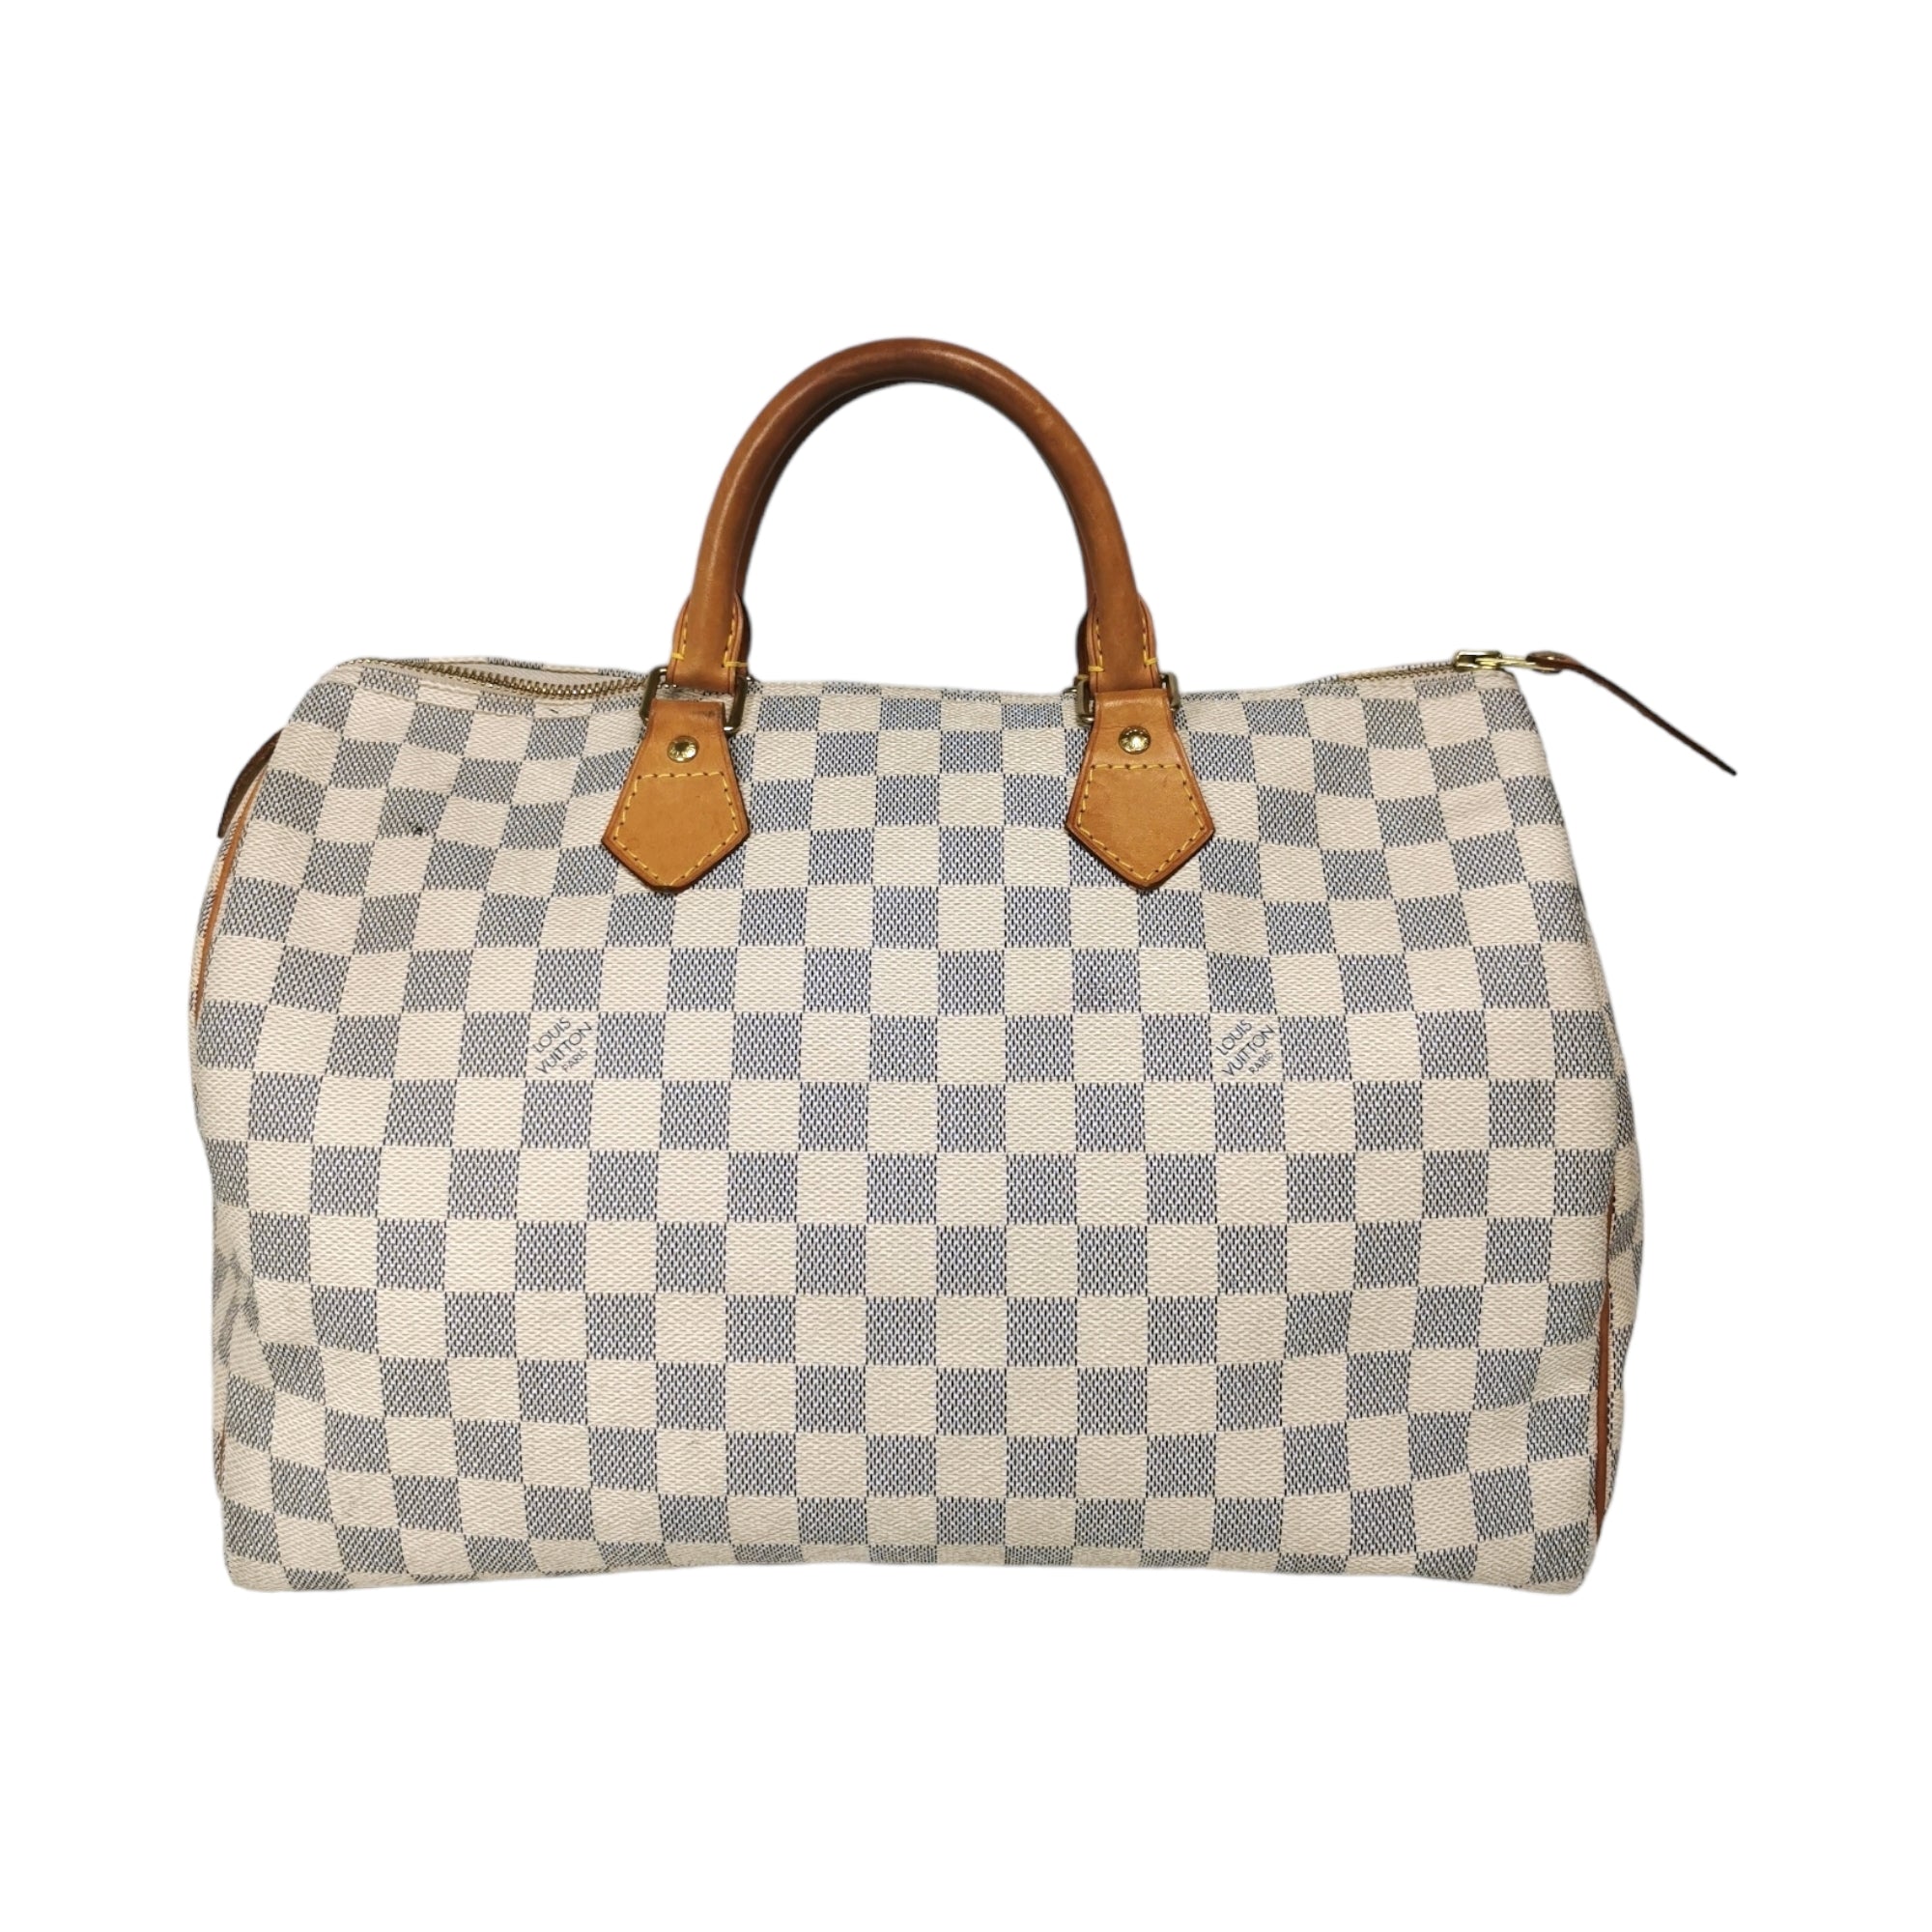 Louis Vuitton Speedy 35 Damier Bag